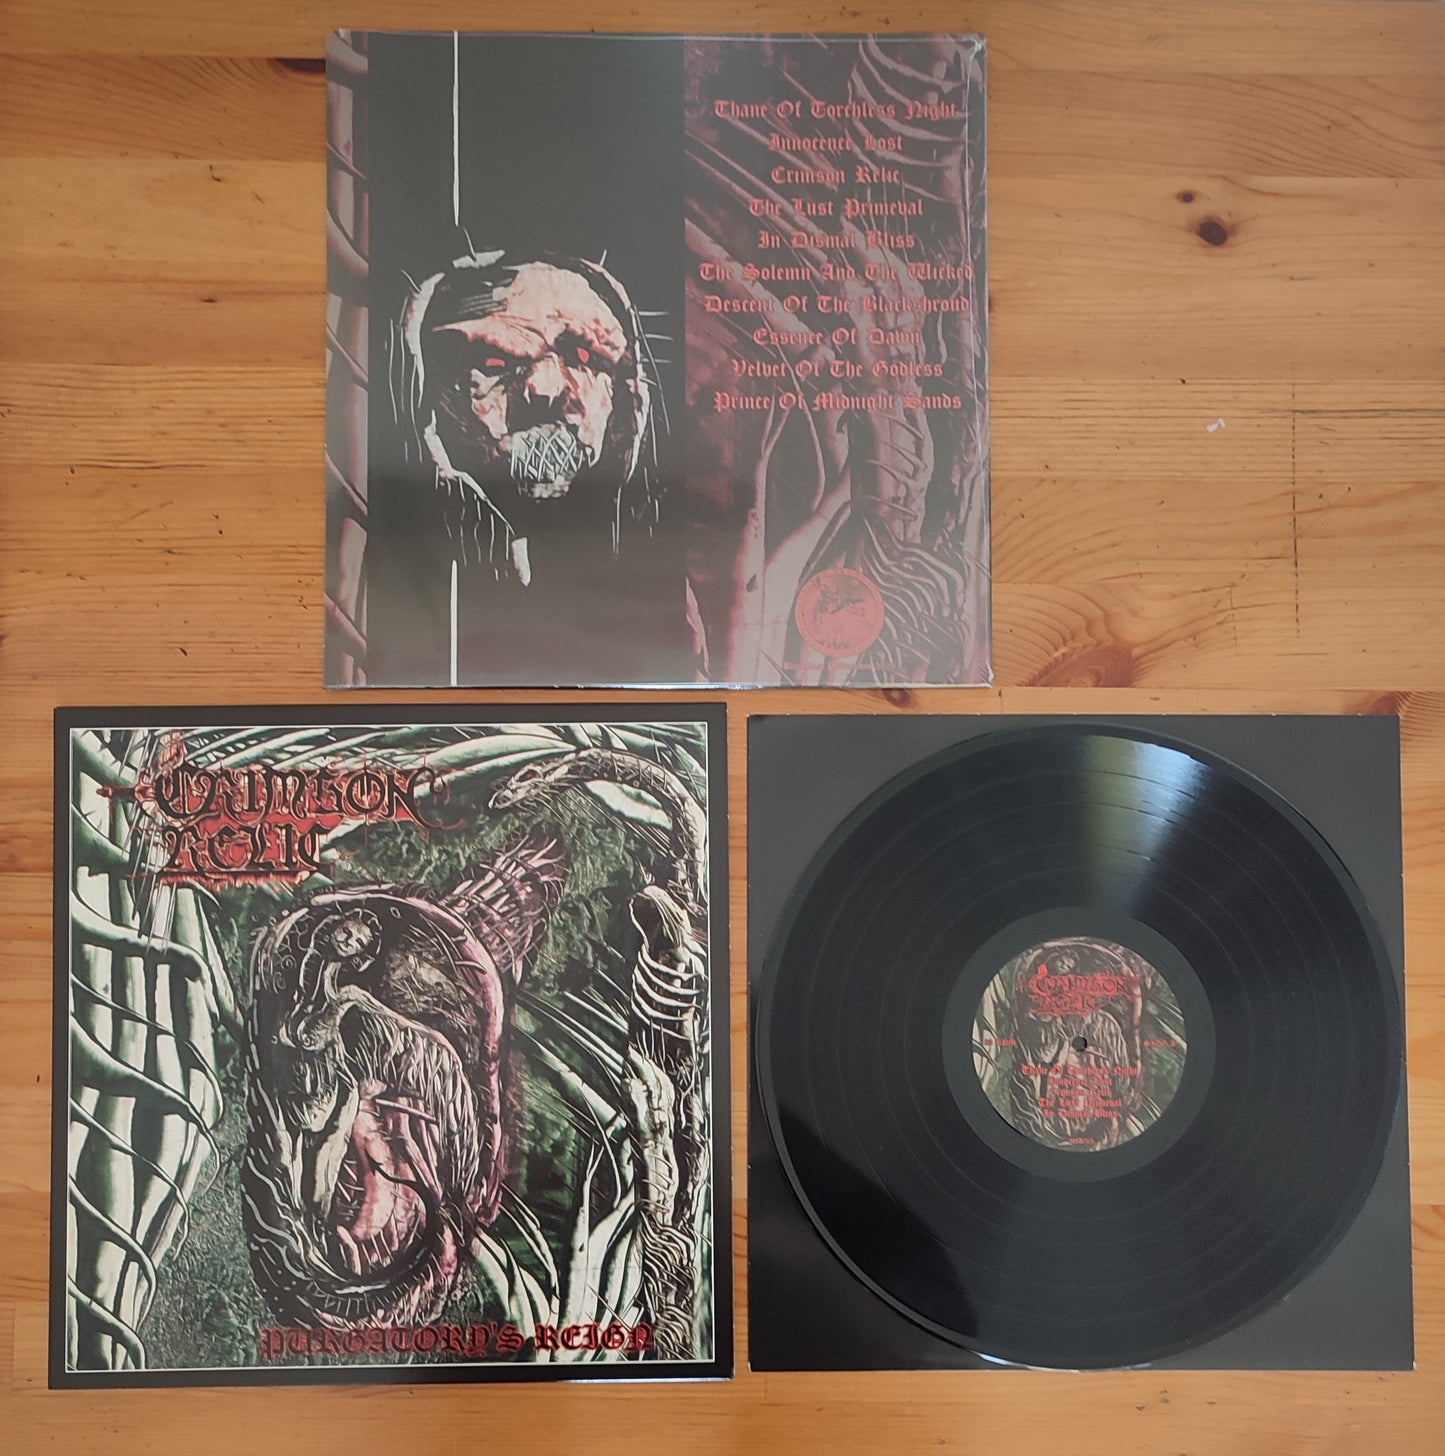 Crimson Relic (US) "Purgatory's Reign" - 12" LP